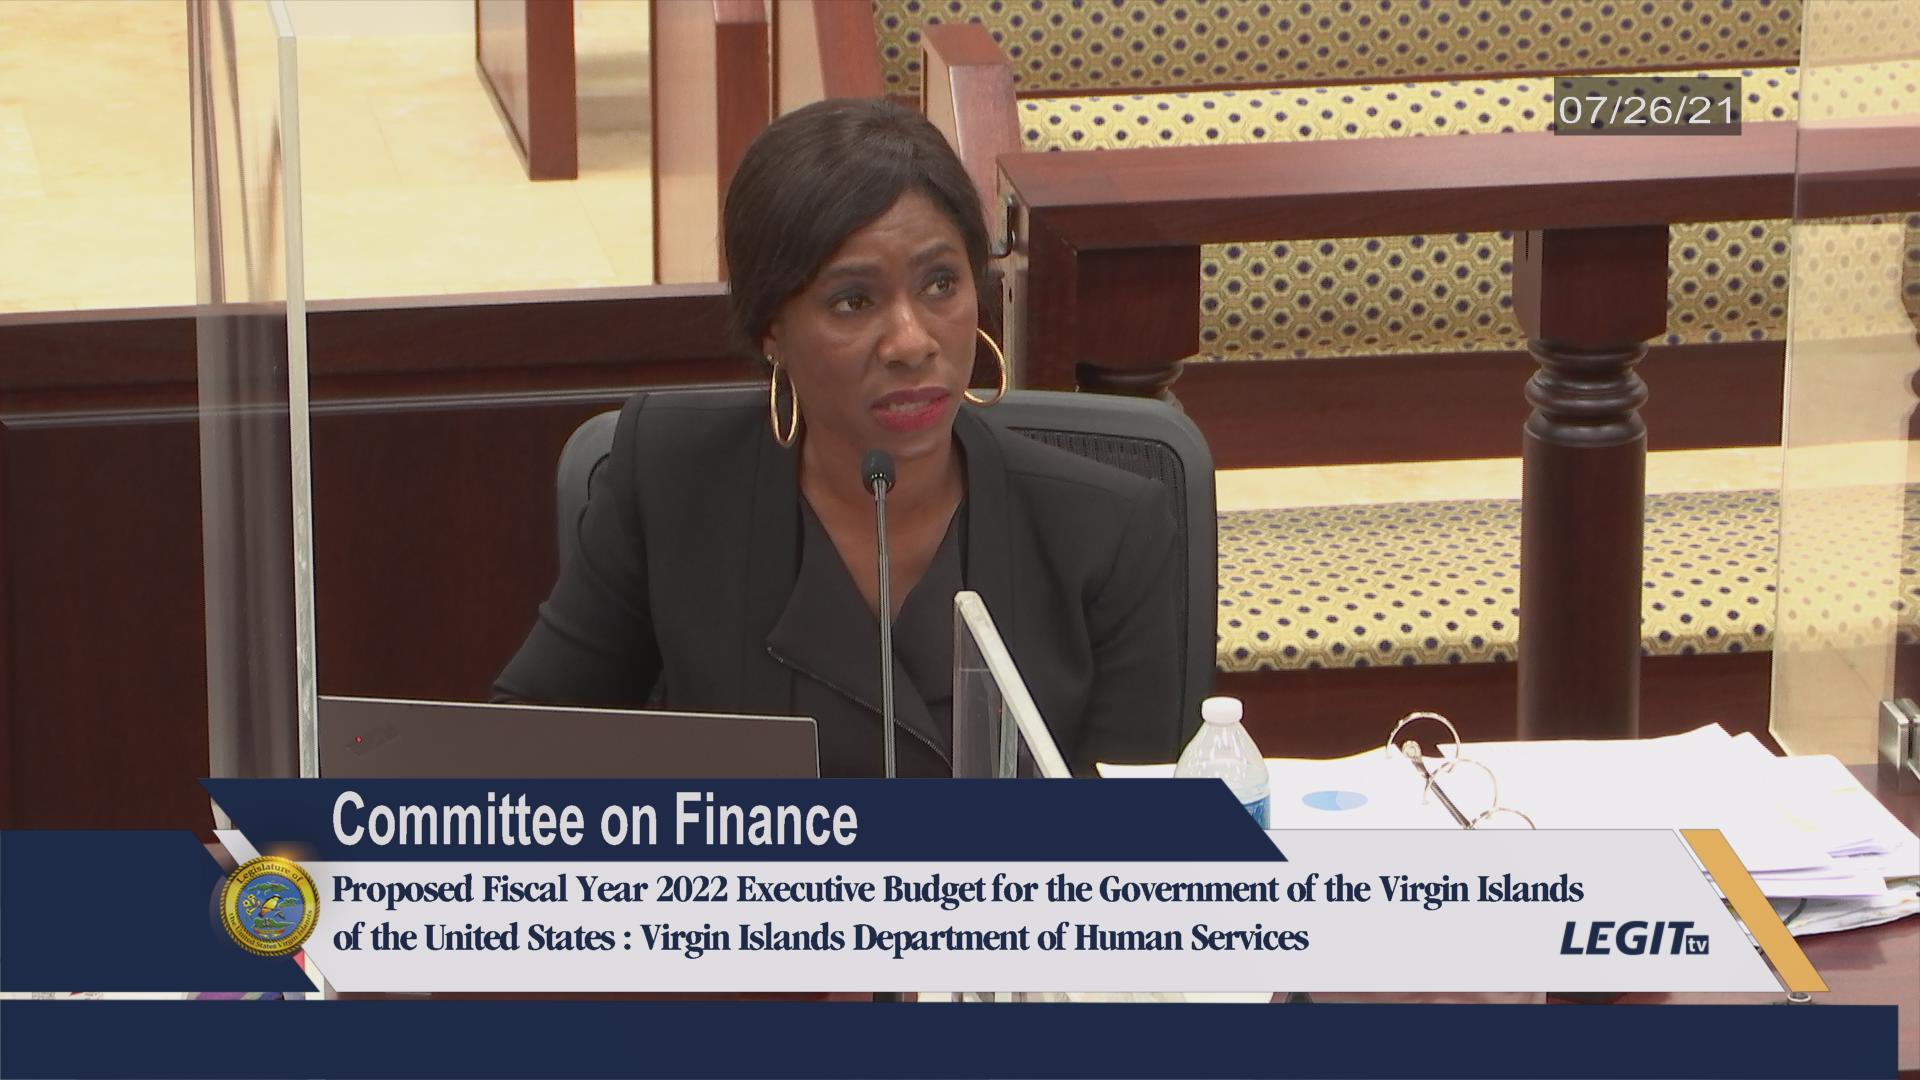 34th Legislature of the Virgin Islands on Livestream